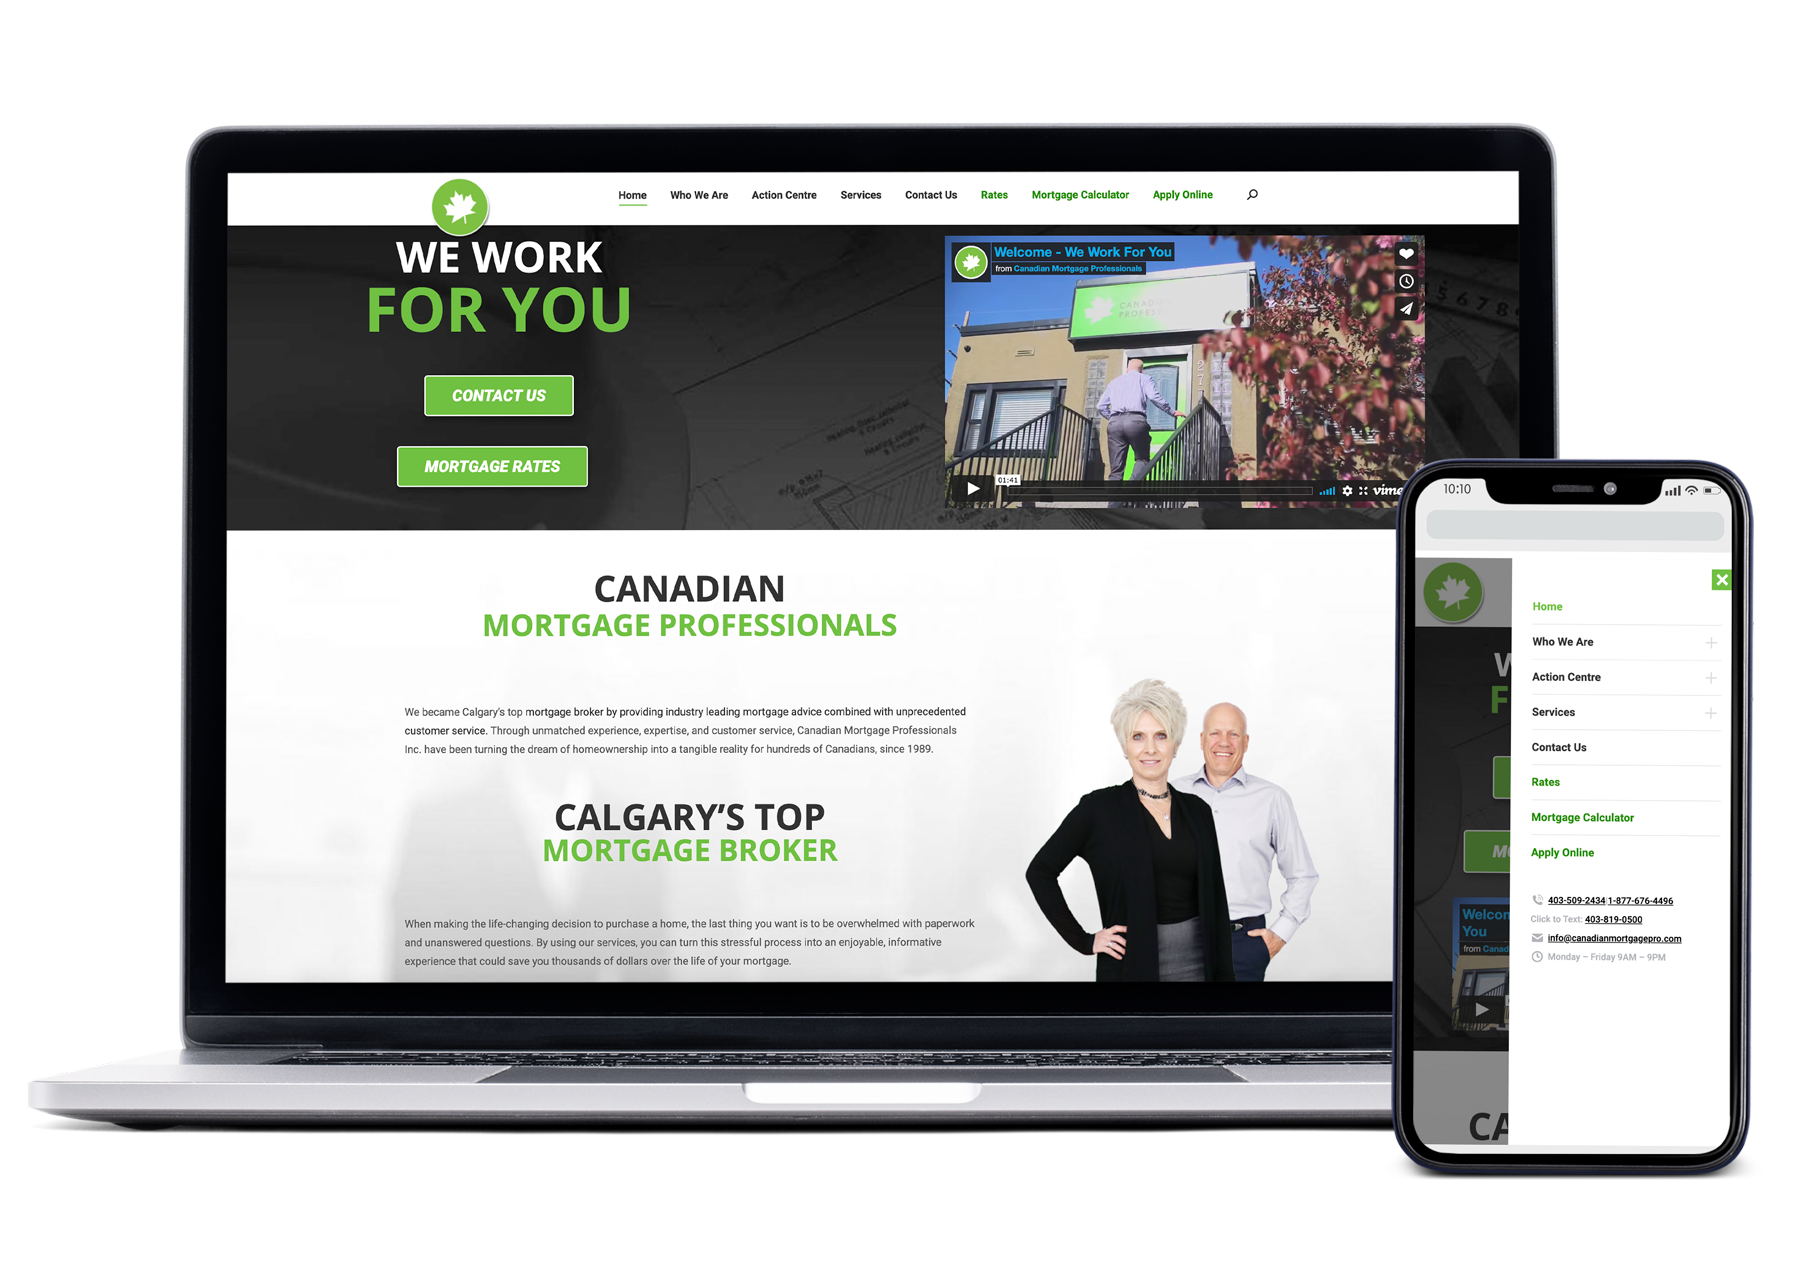 canadian mortgage professionals website design mockup on mobile and laptop